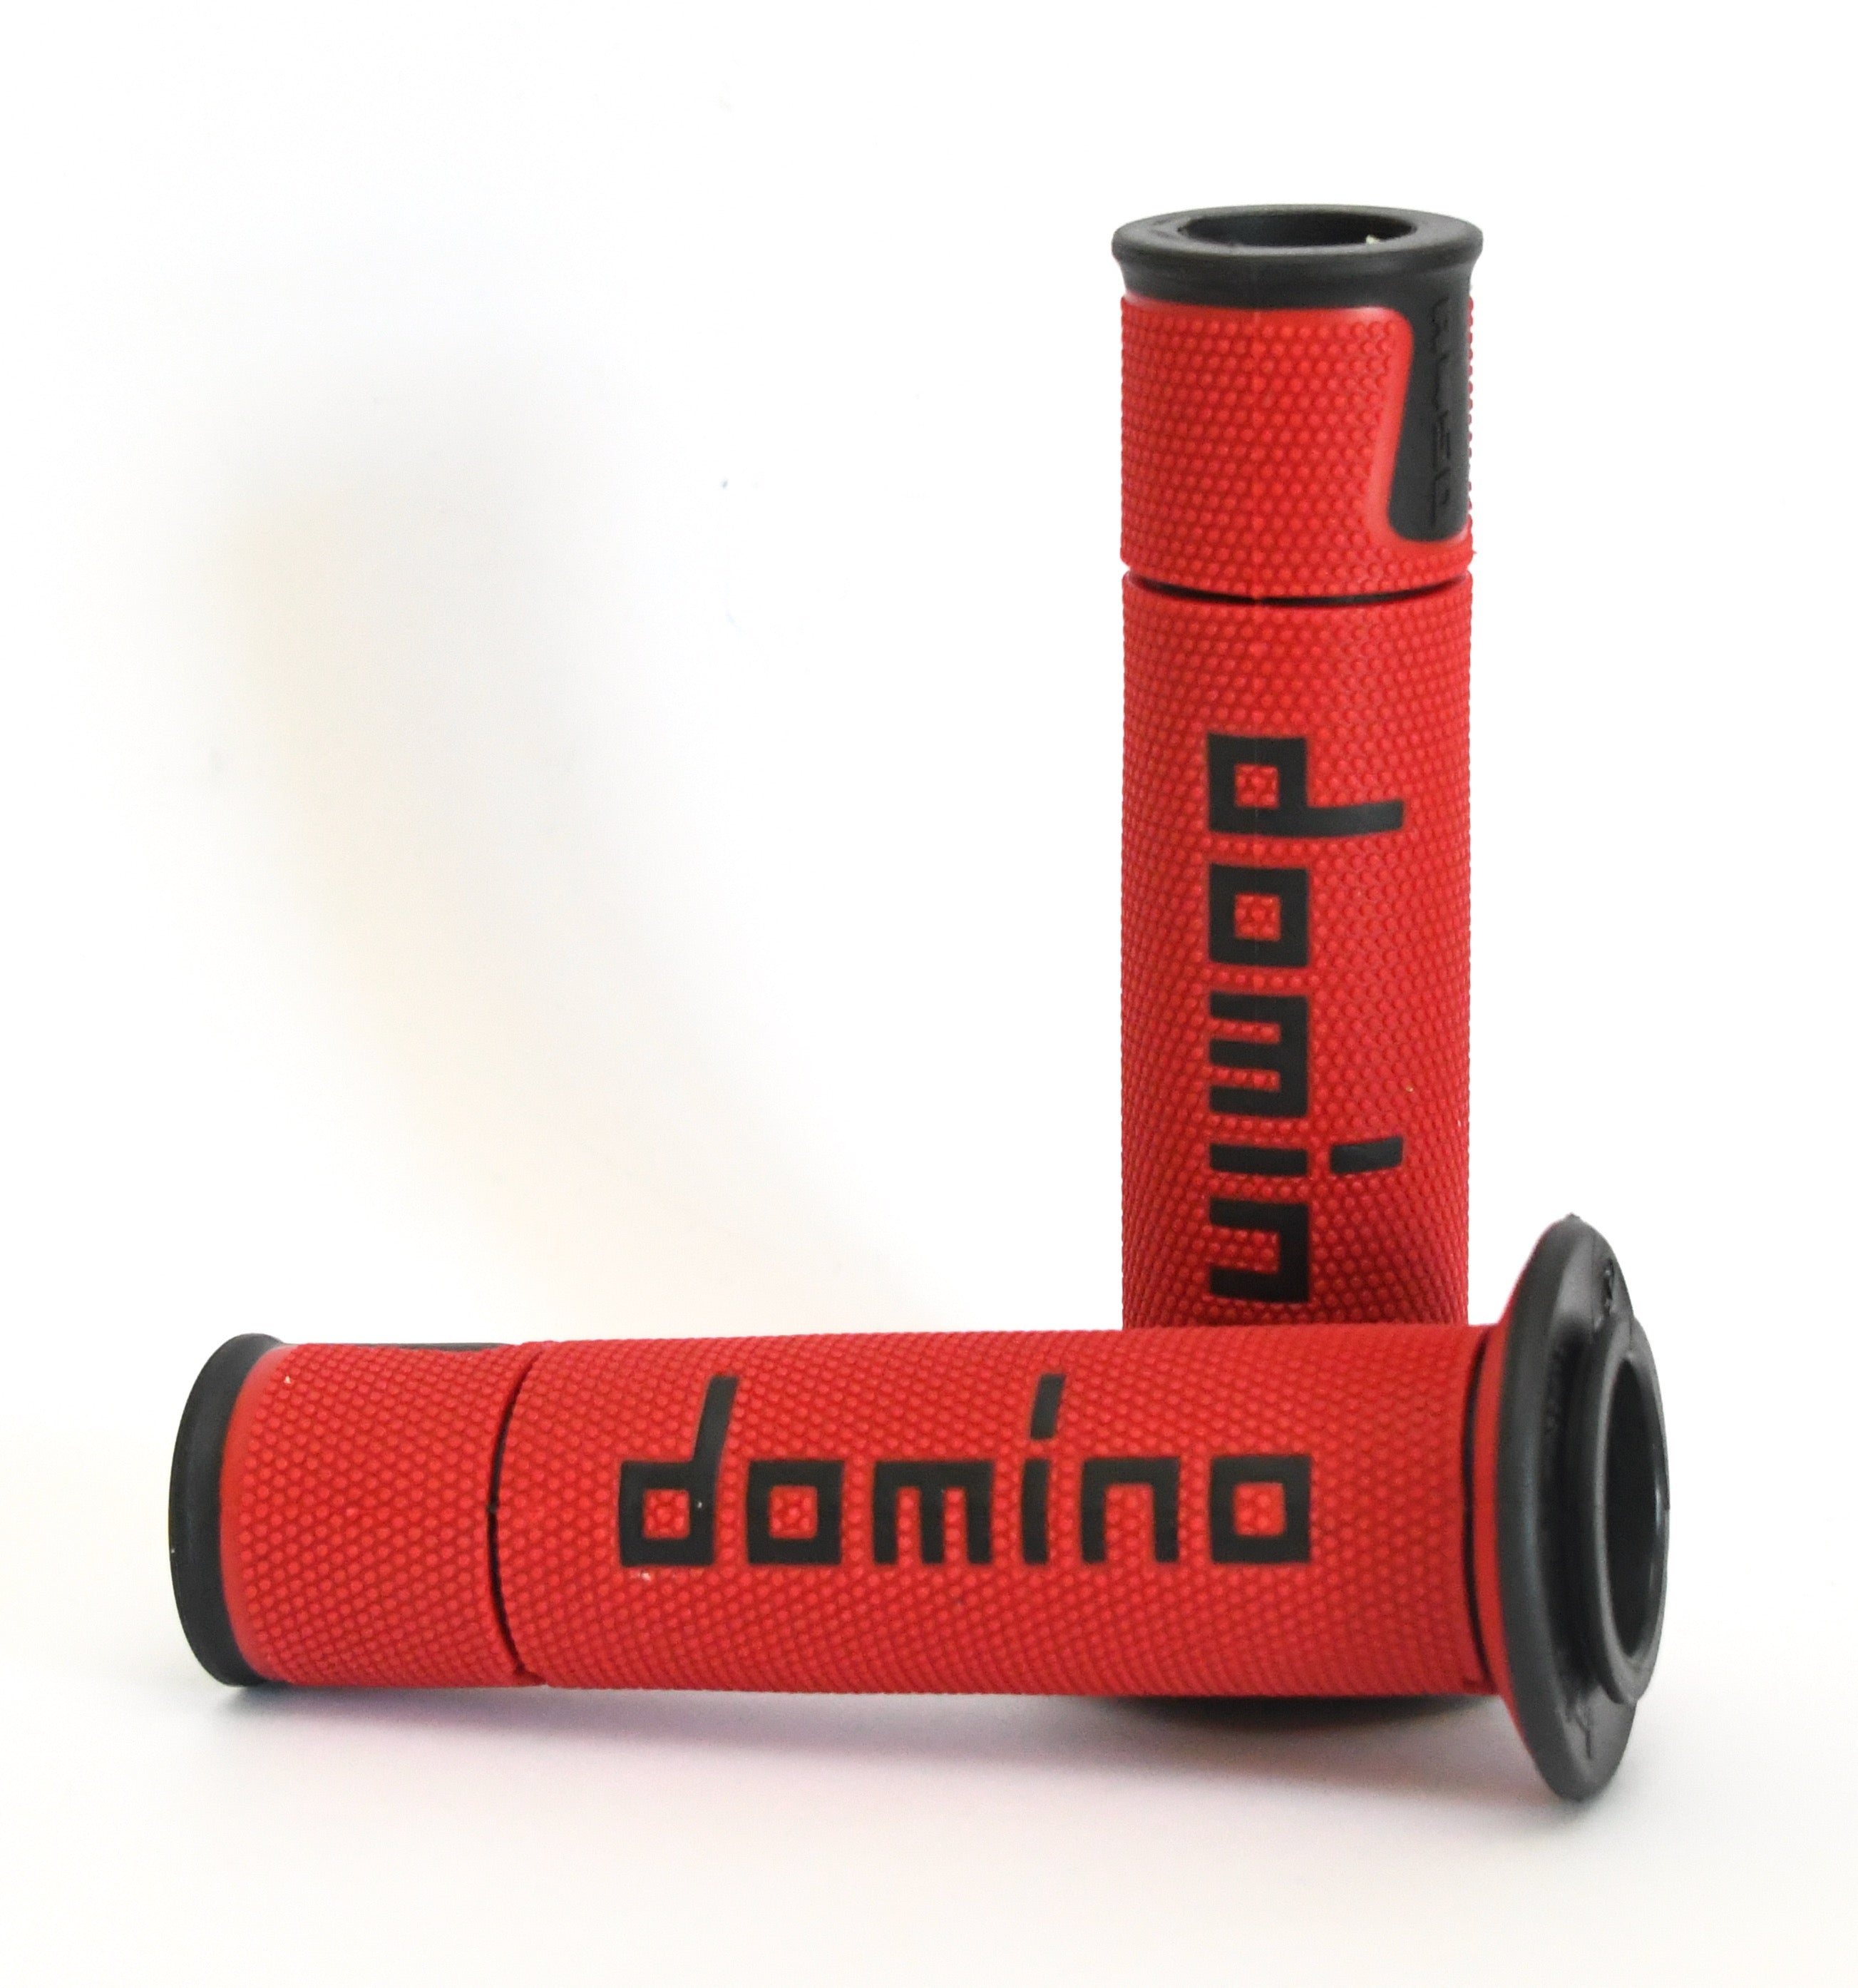 Domino A450 Road Racing grips - Medium Soft - 0